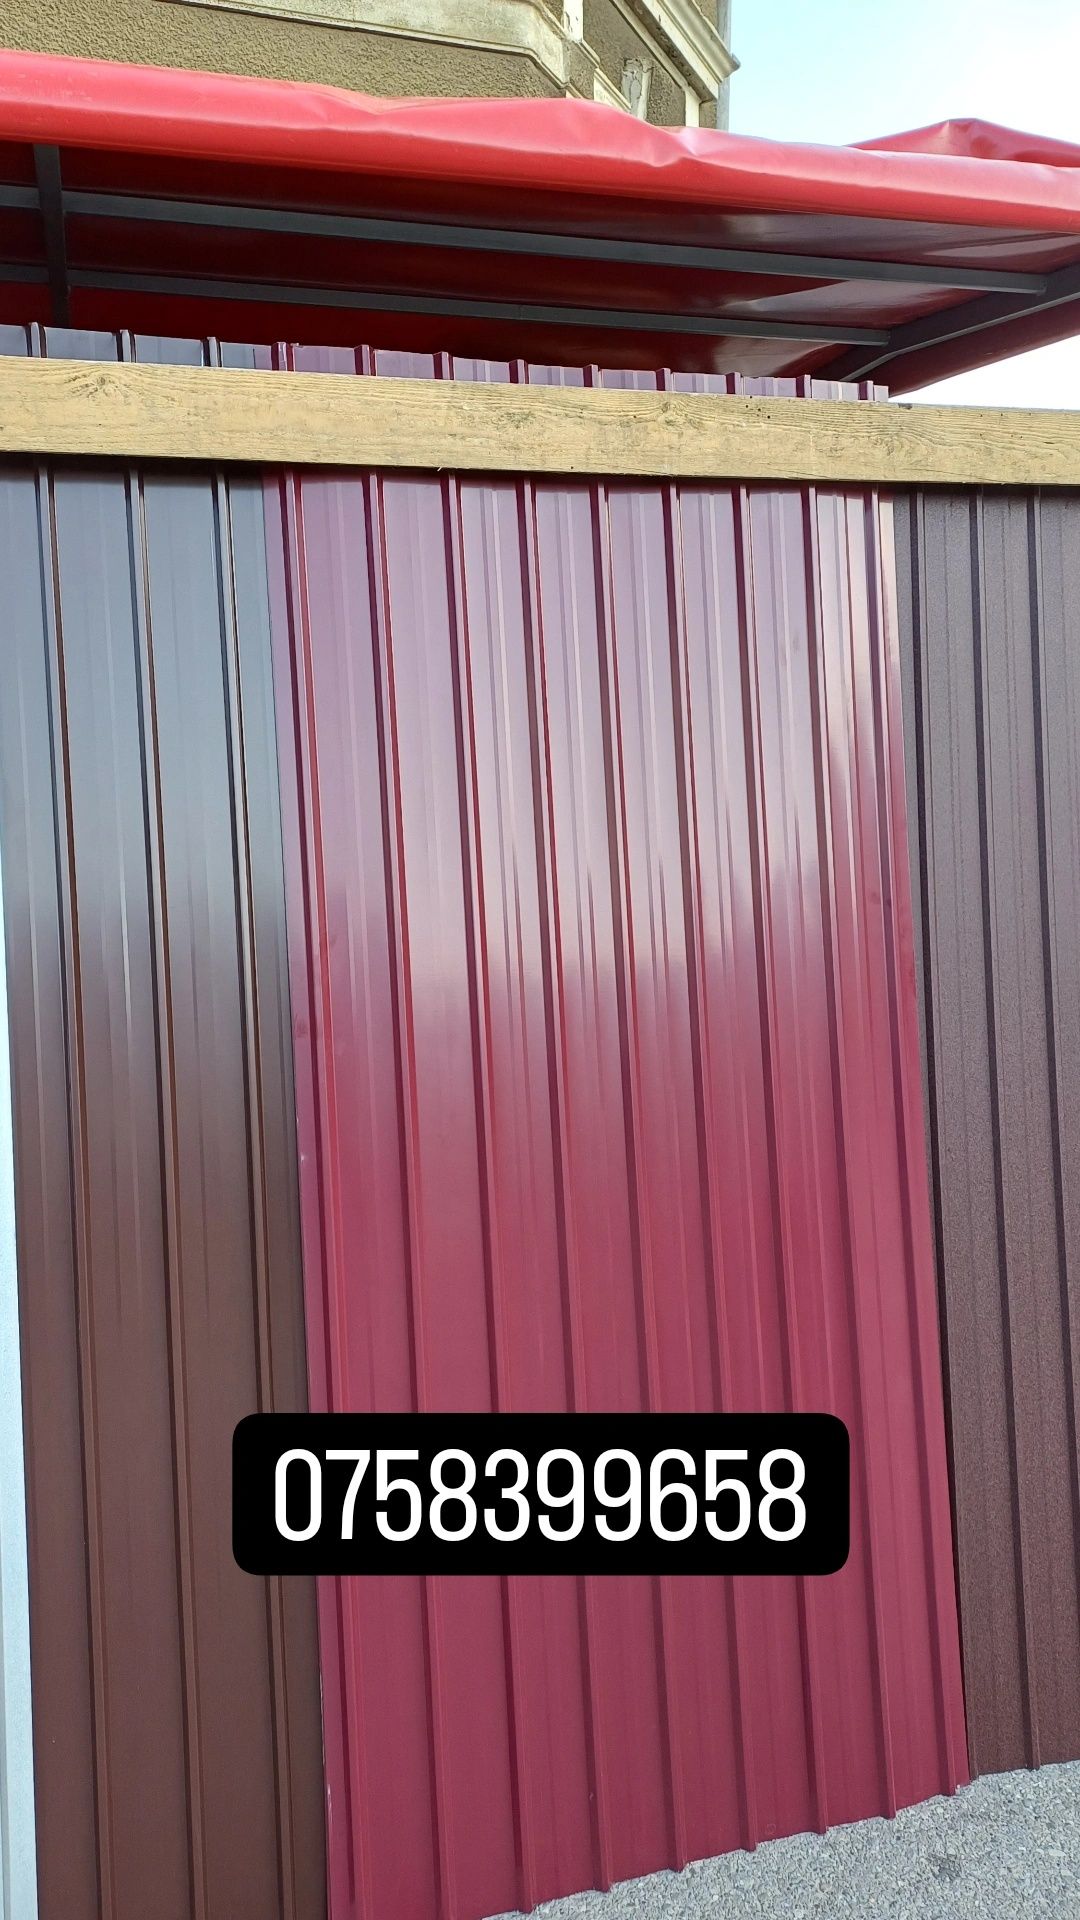 Tabla cutata colorata sau zincata pentru gard sau acoperiș